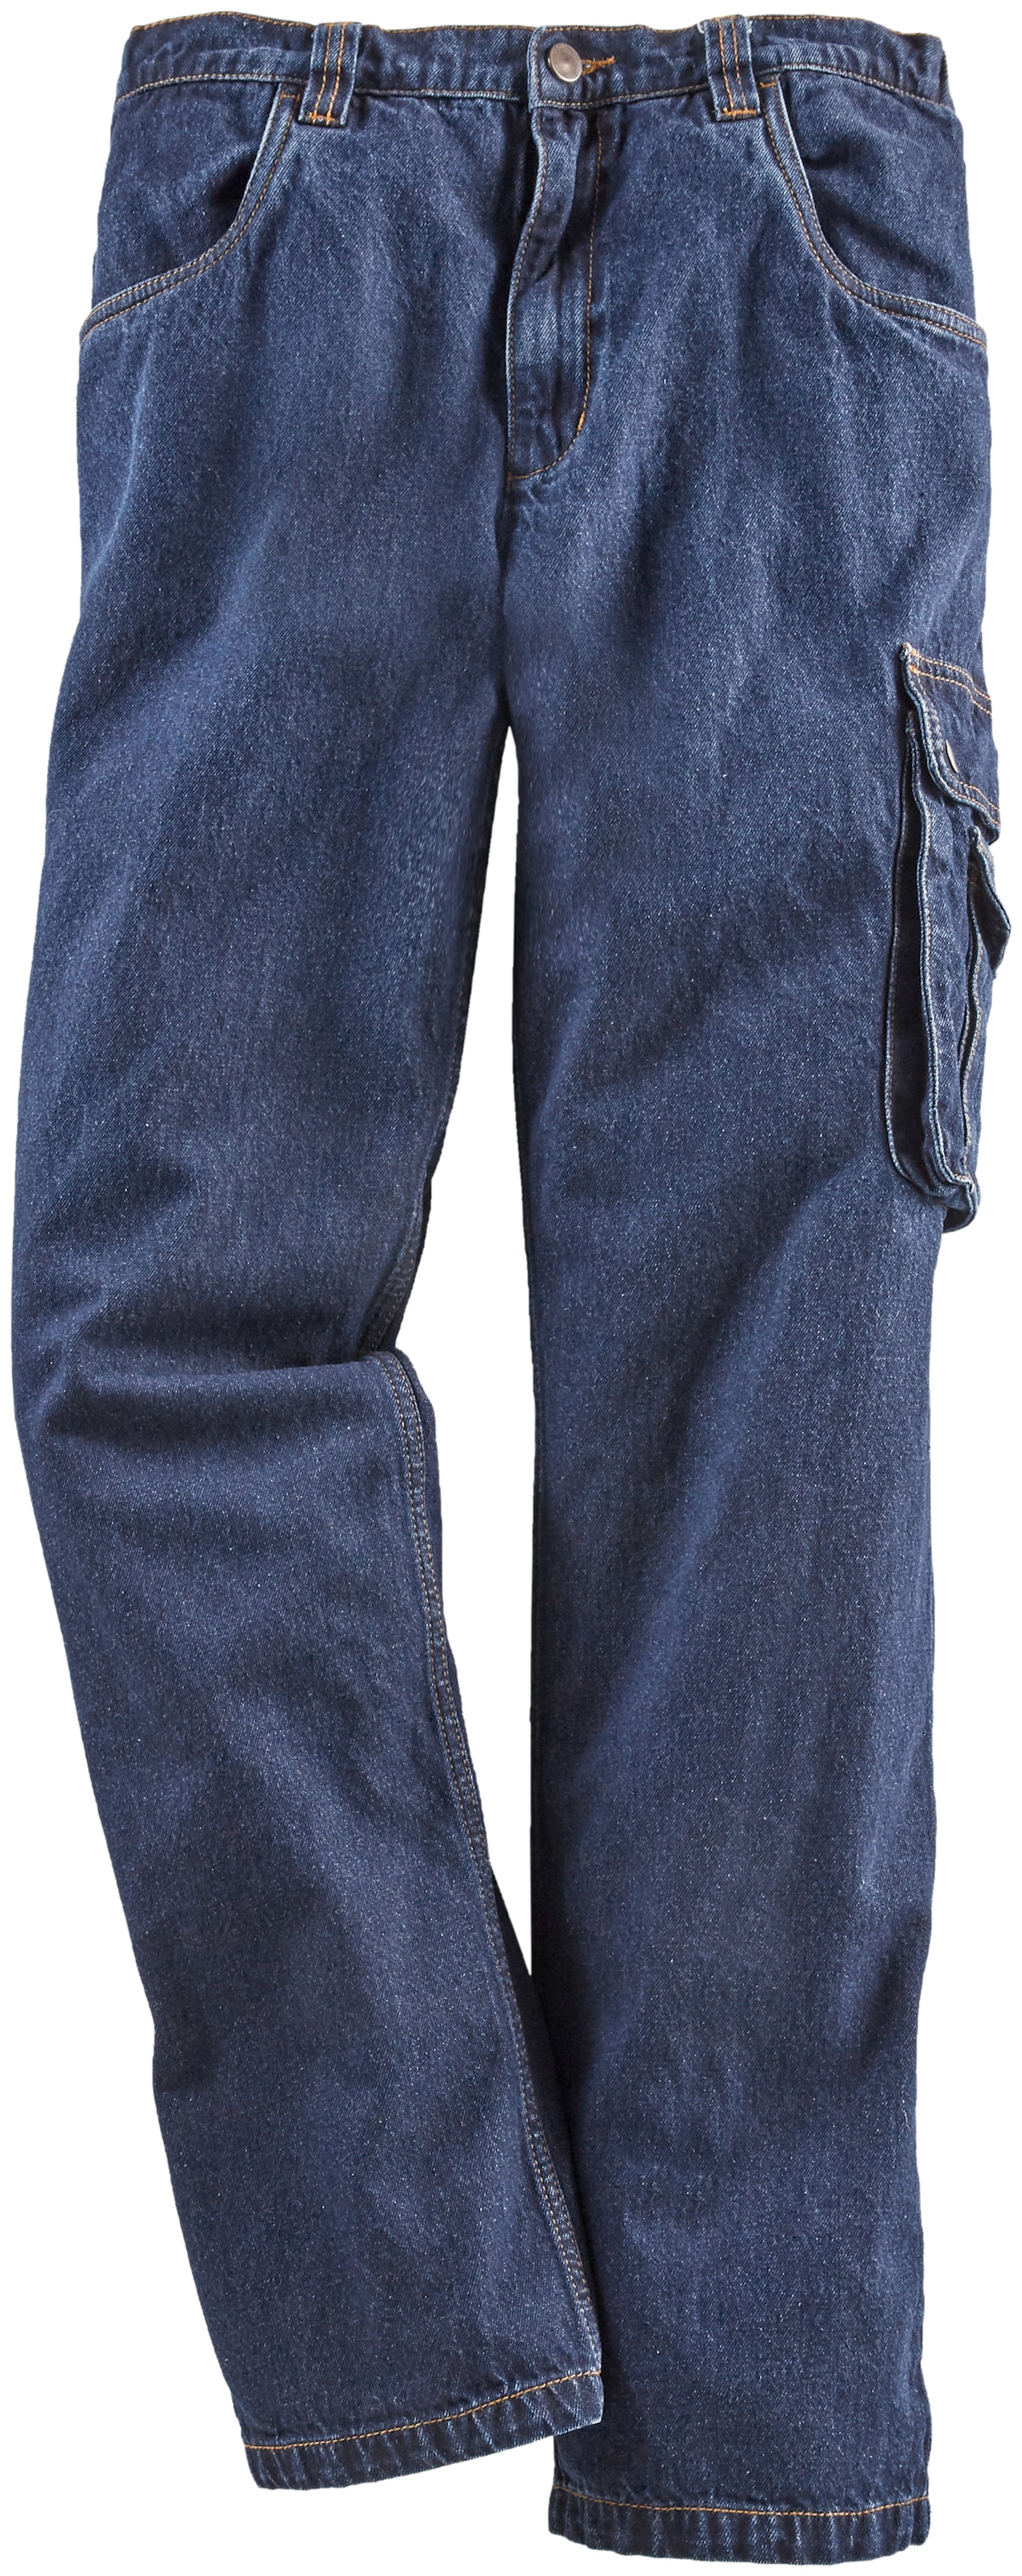 Arbeitshose »Jeans Worker«, (aus 100% Baumwolle, robuster Jeansstoff, comfort fit),...